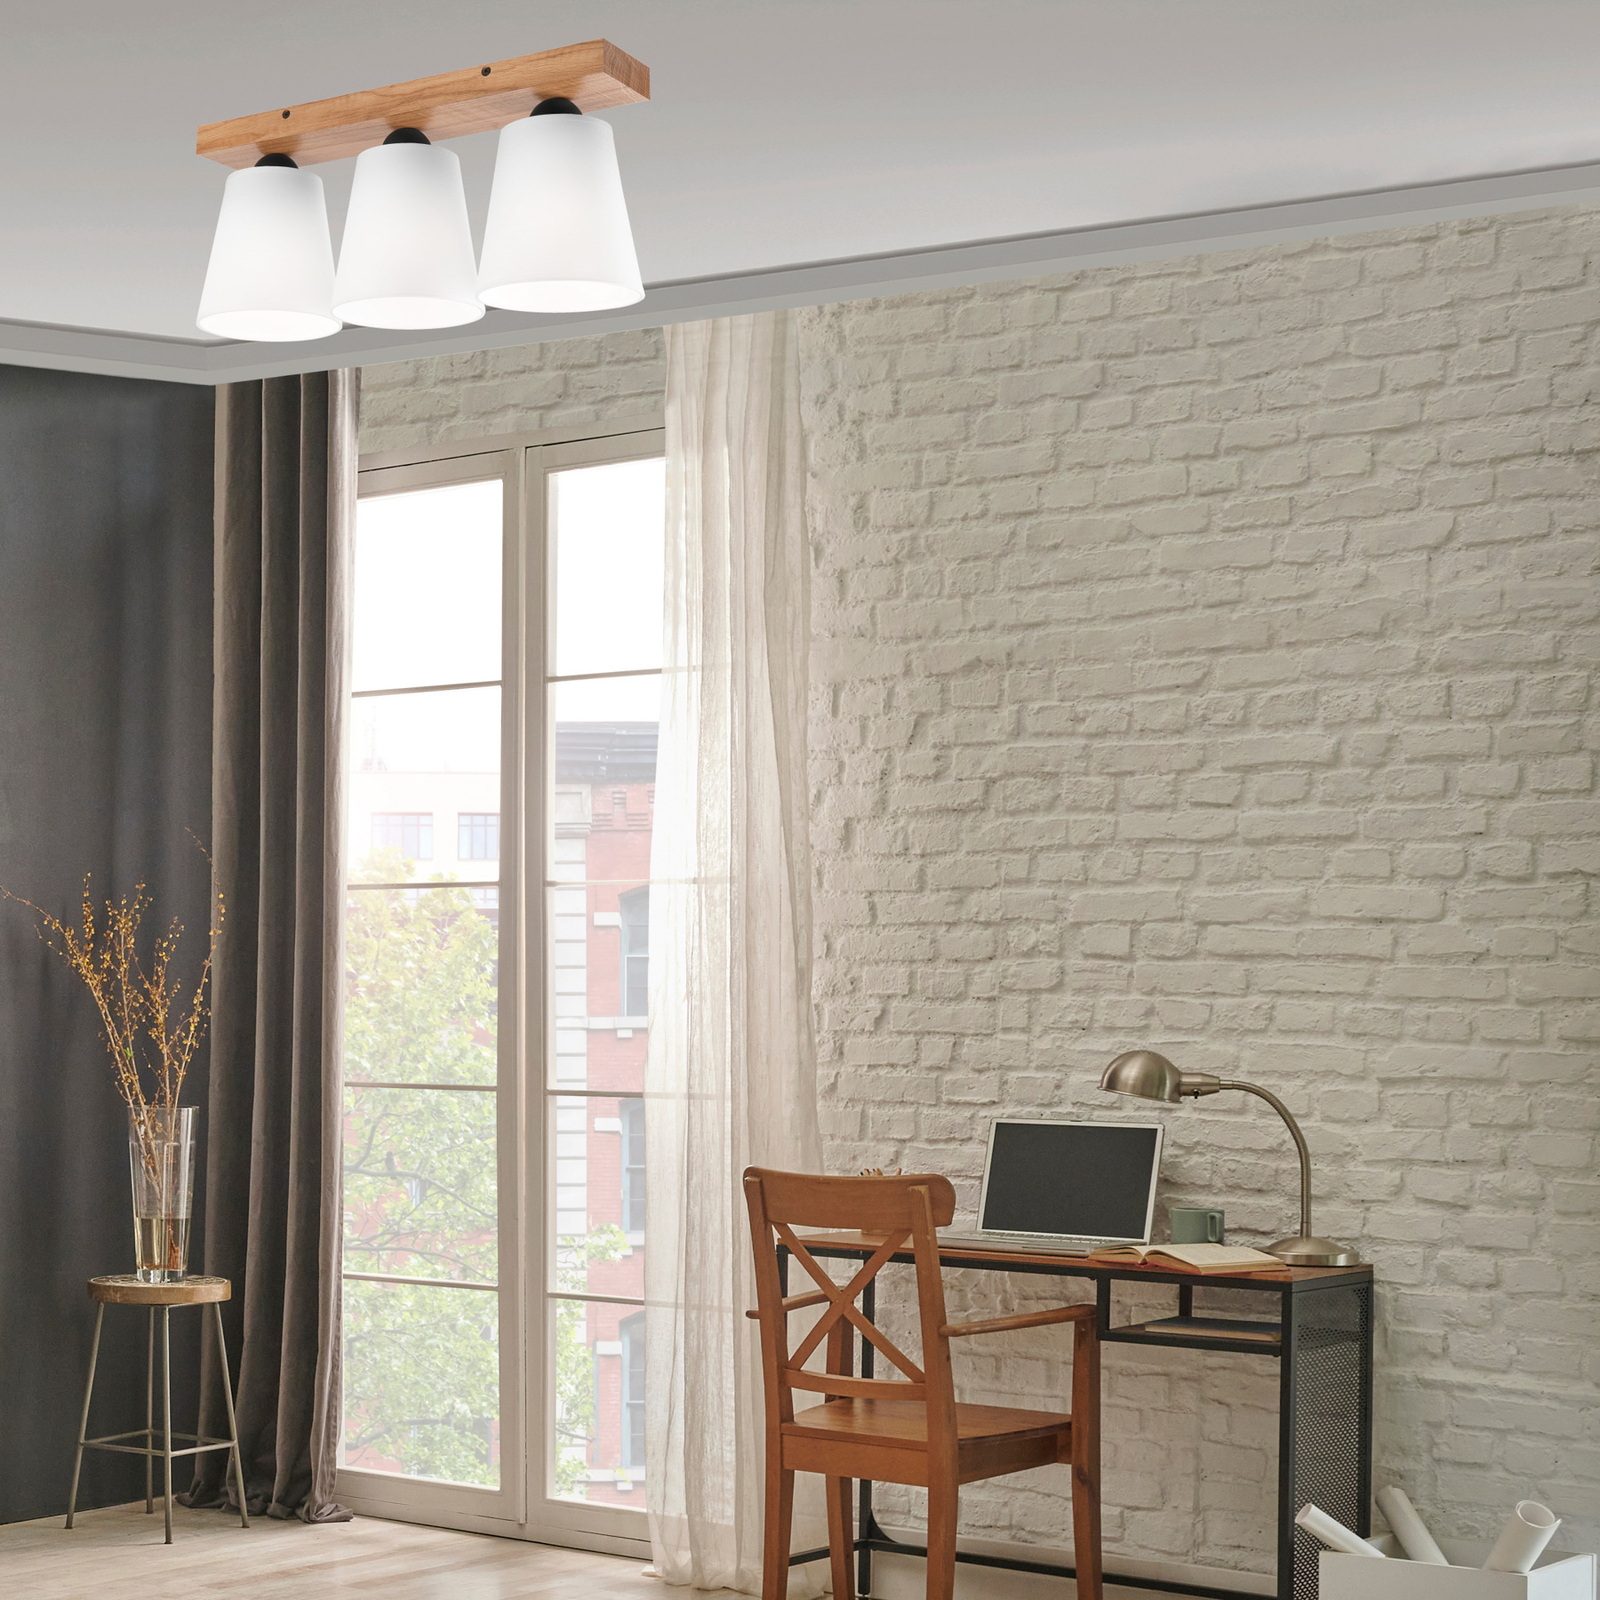 Envostar Risco ceiling lamp 3-bulb fabric shade white